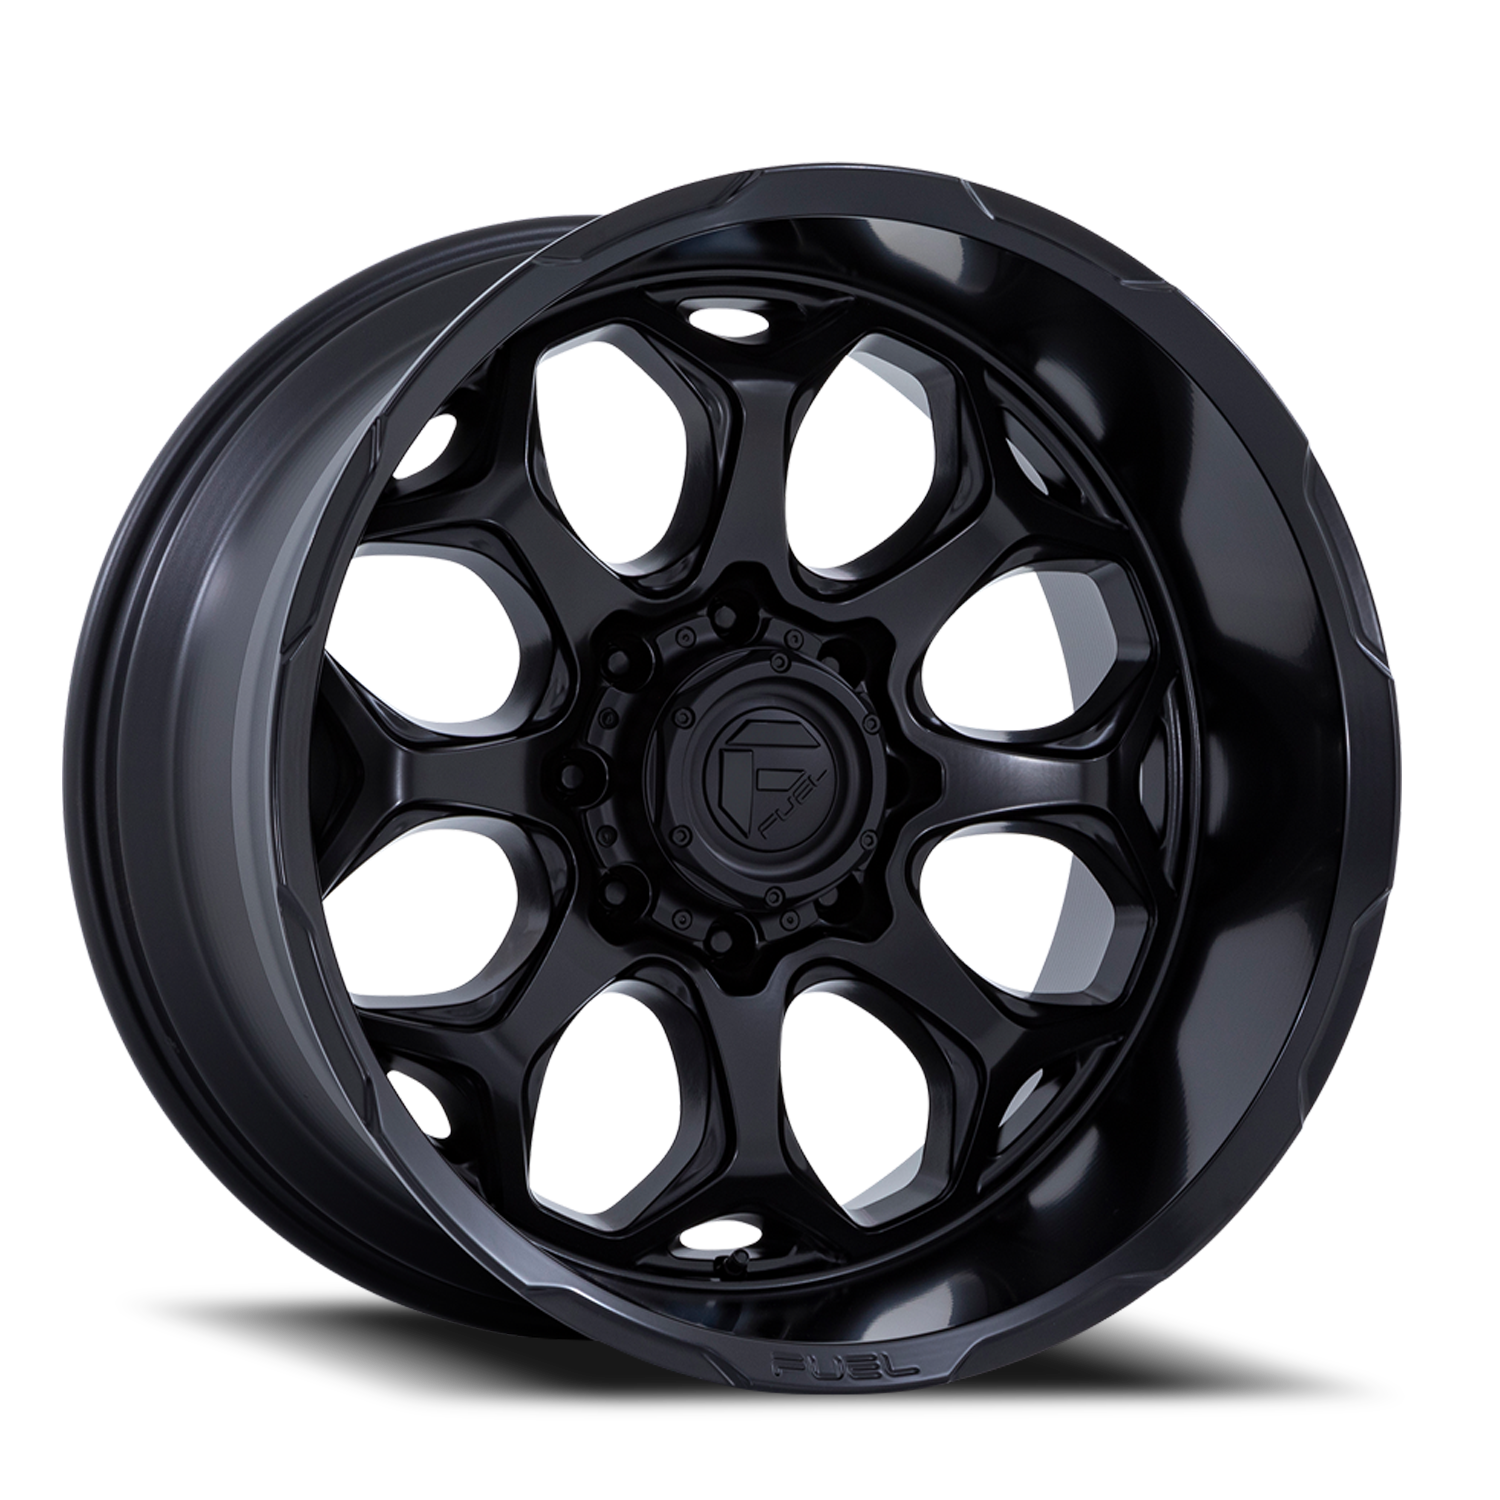 Aluminum Wheels 20X10 Scepter FC862 MX 6 On 135 Blackout 87.1 Bore -18 Offset Fuel Off Road Wheels